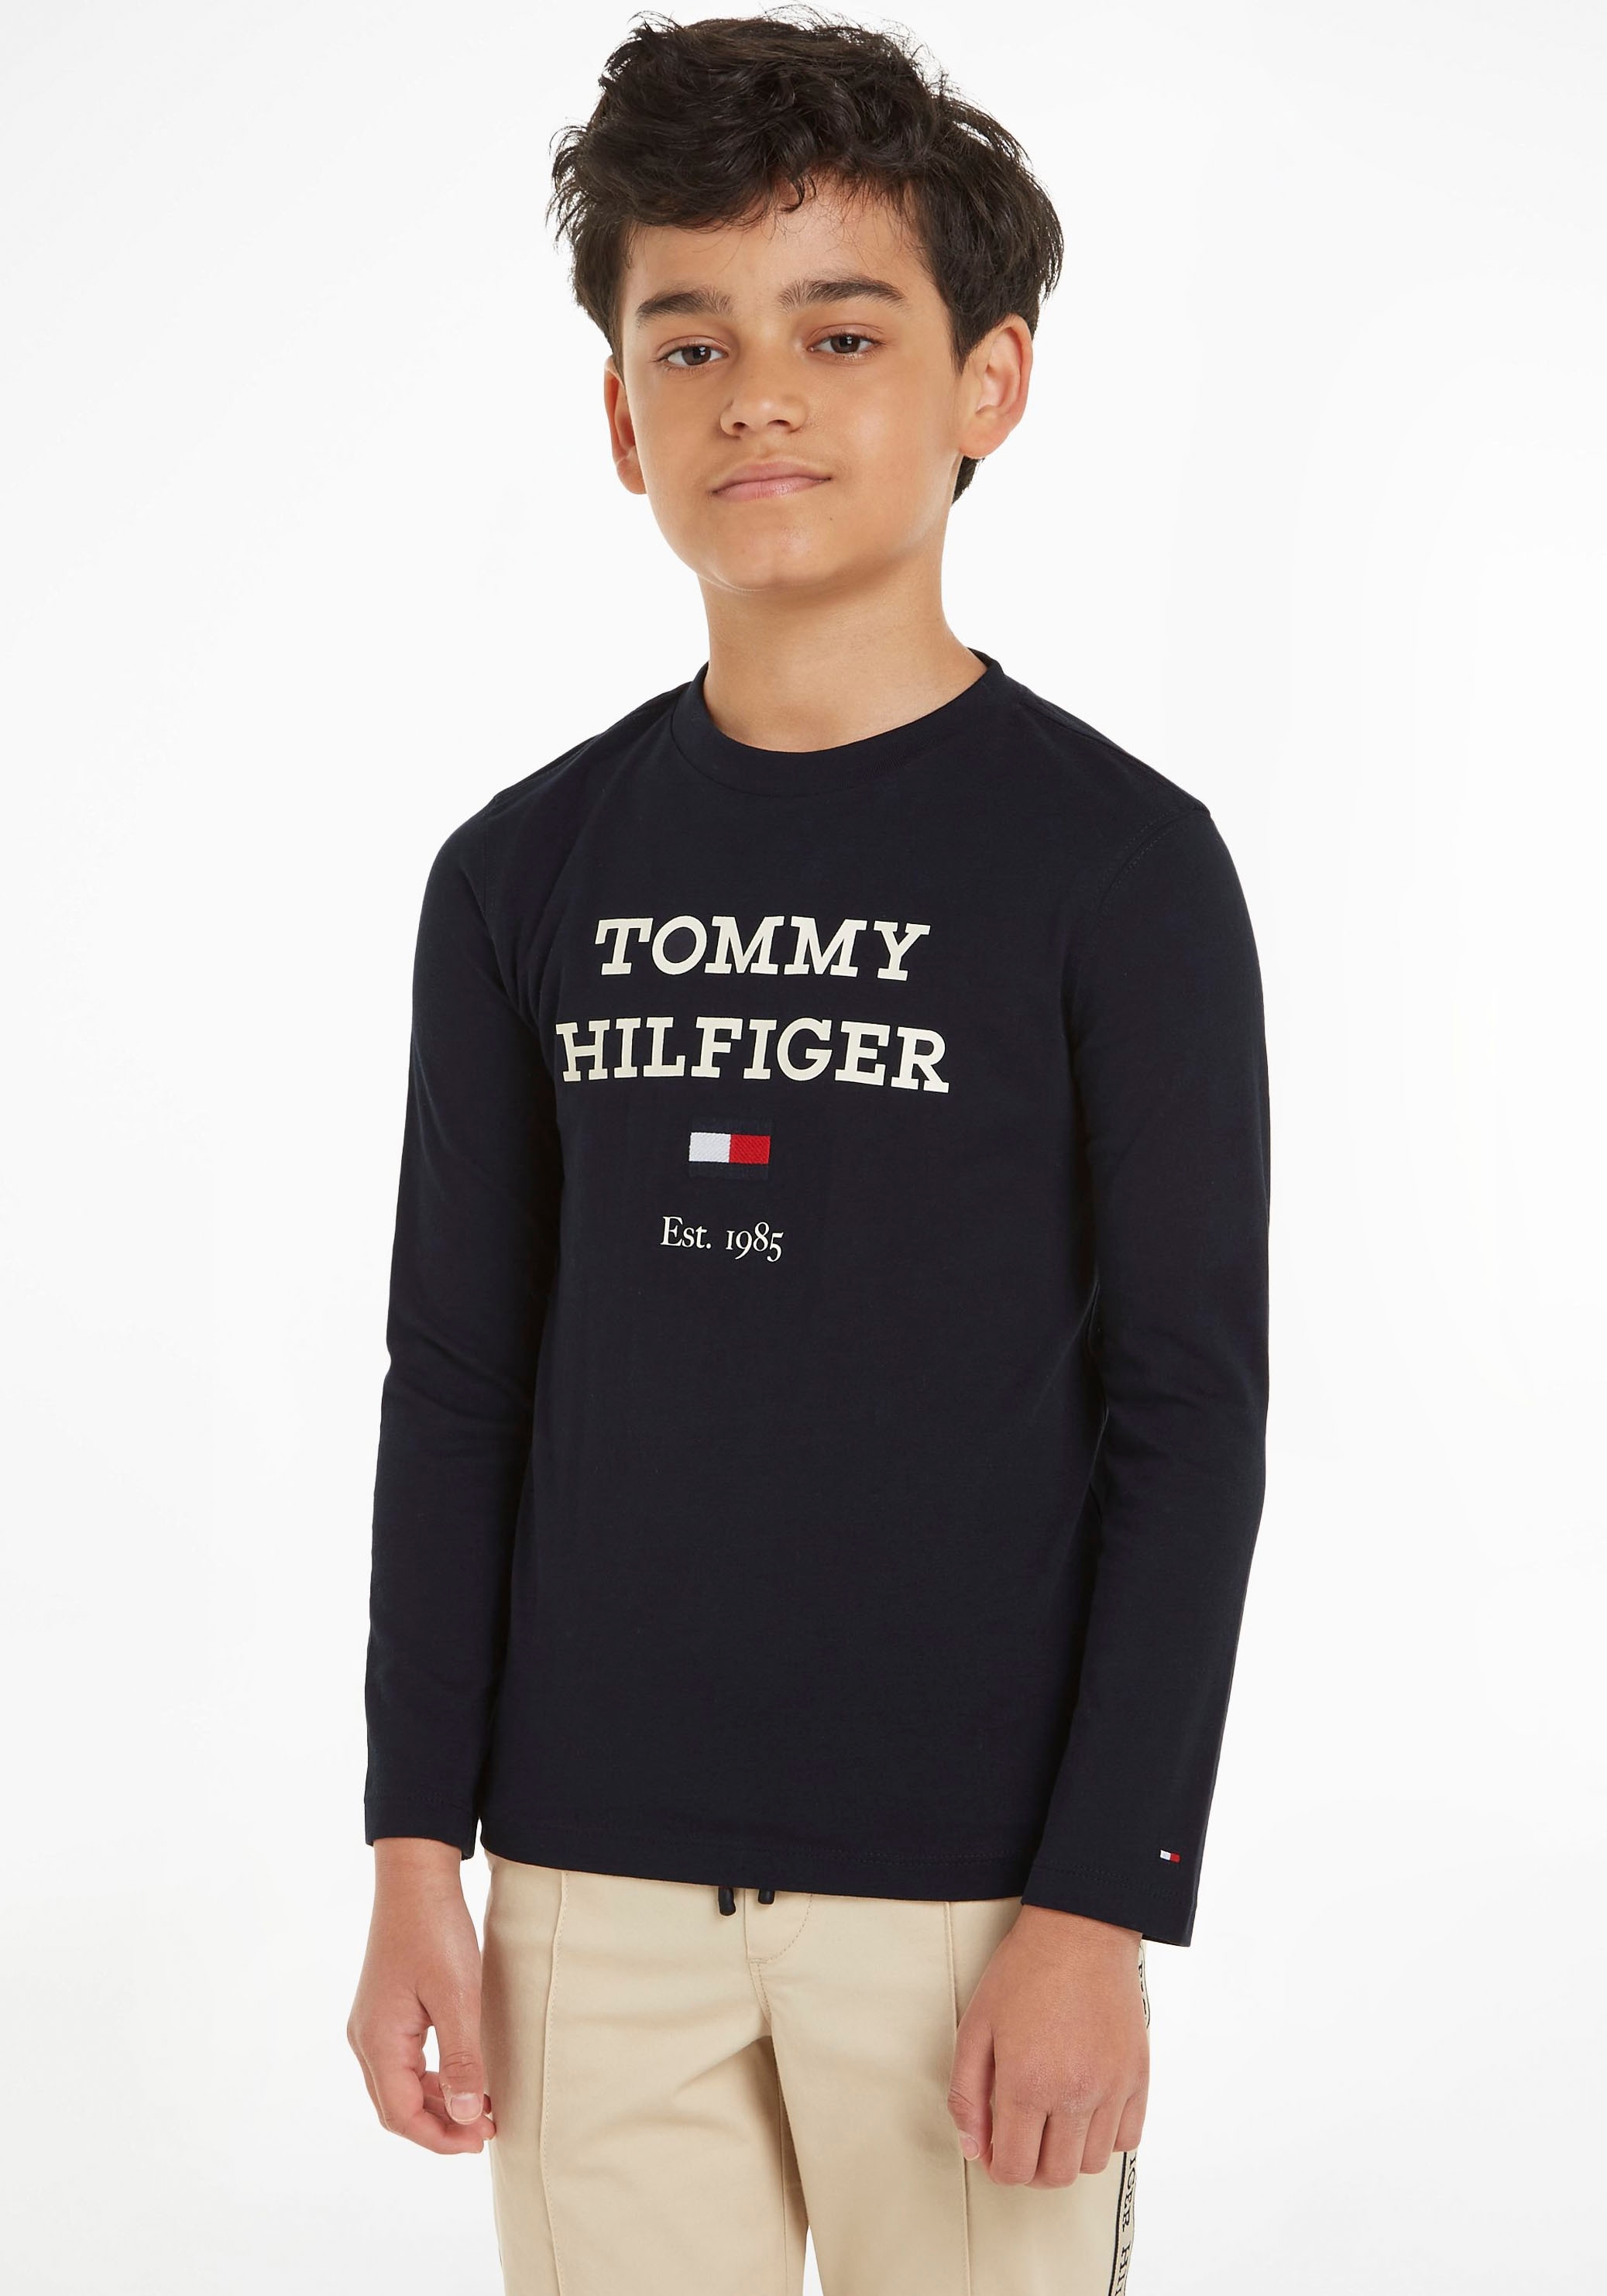 Tommy ▻ Hilfiger shoppen günstig